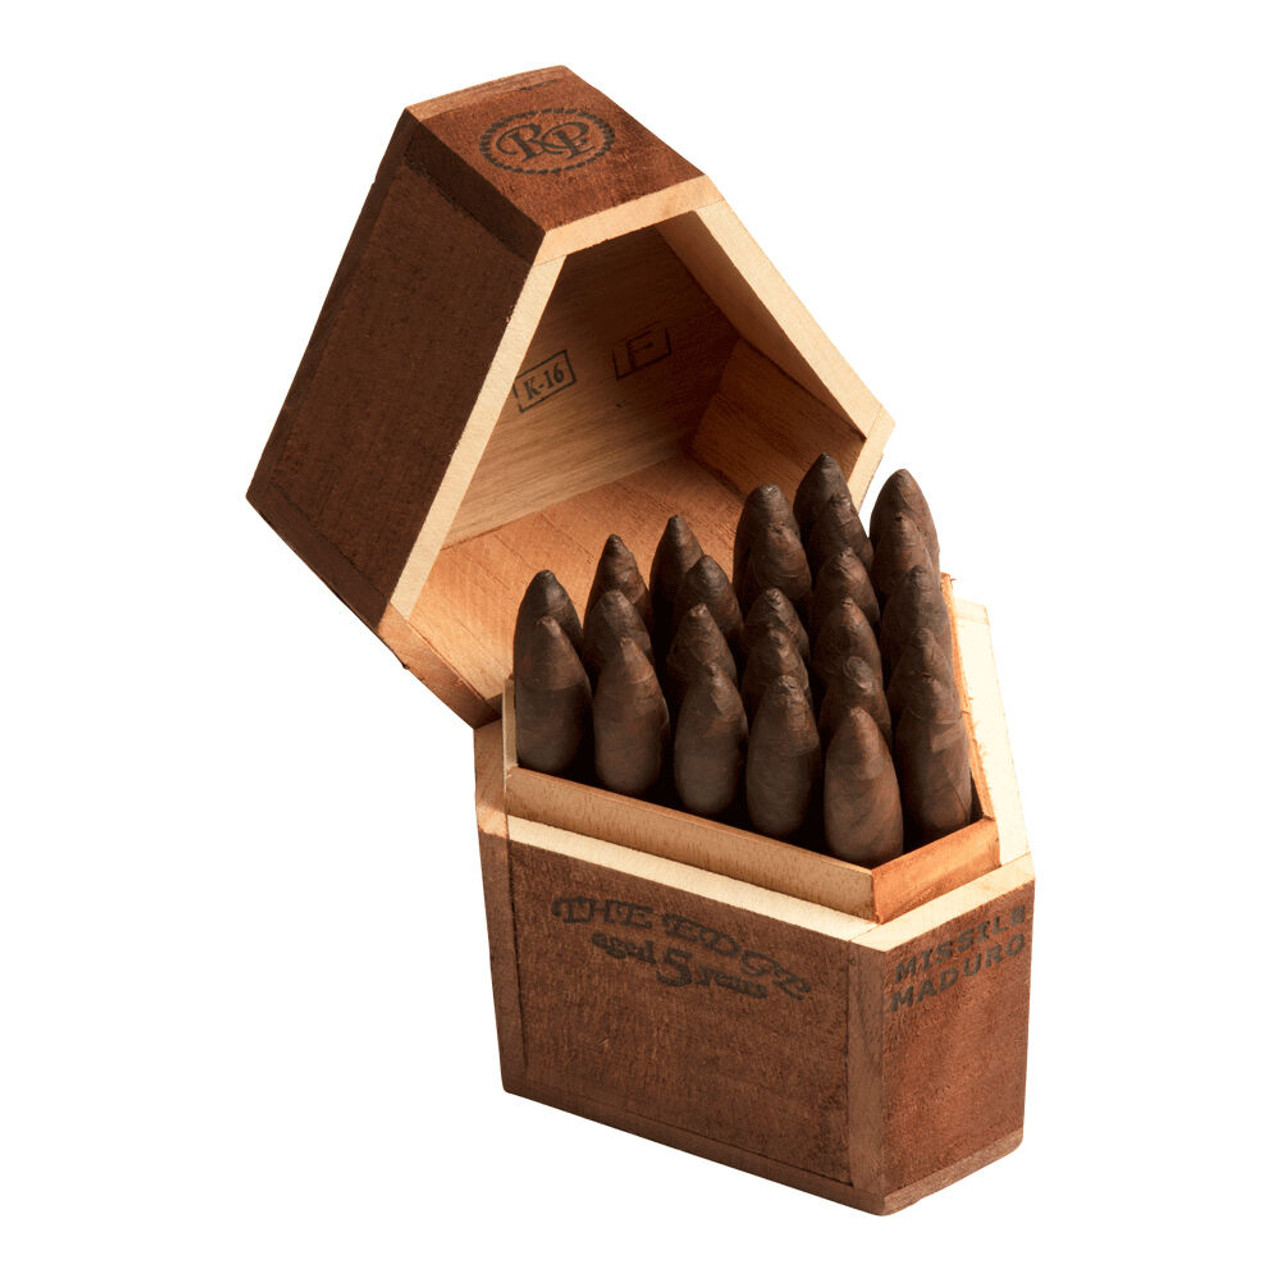 Rocky Patel The Edge Missile Maduro Cigars - 5 x 48 (Box of 25) Open